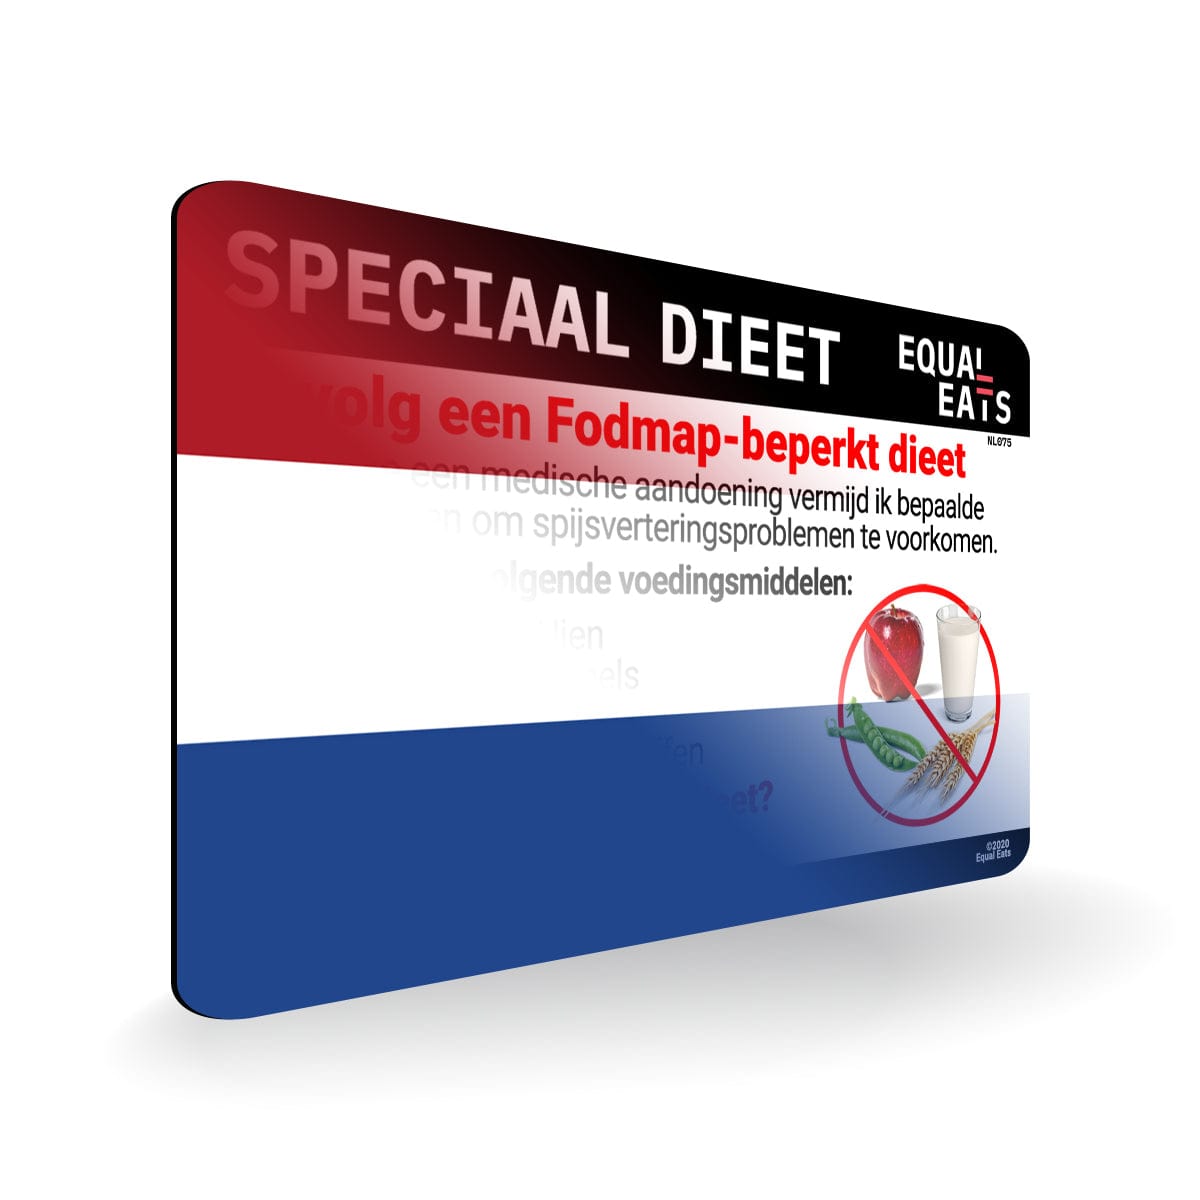 Low FODMAP Diet in Dutch. Low FODMAP Diet Card for Netherlands